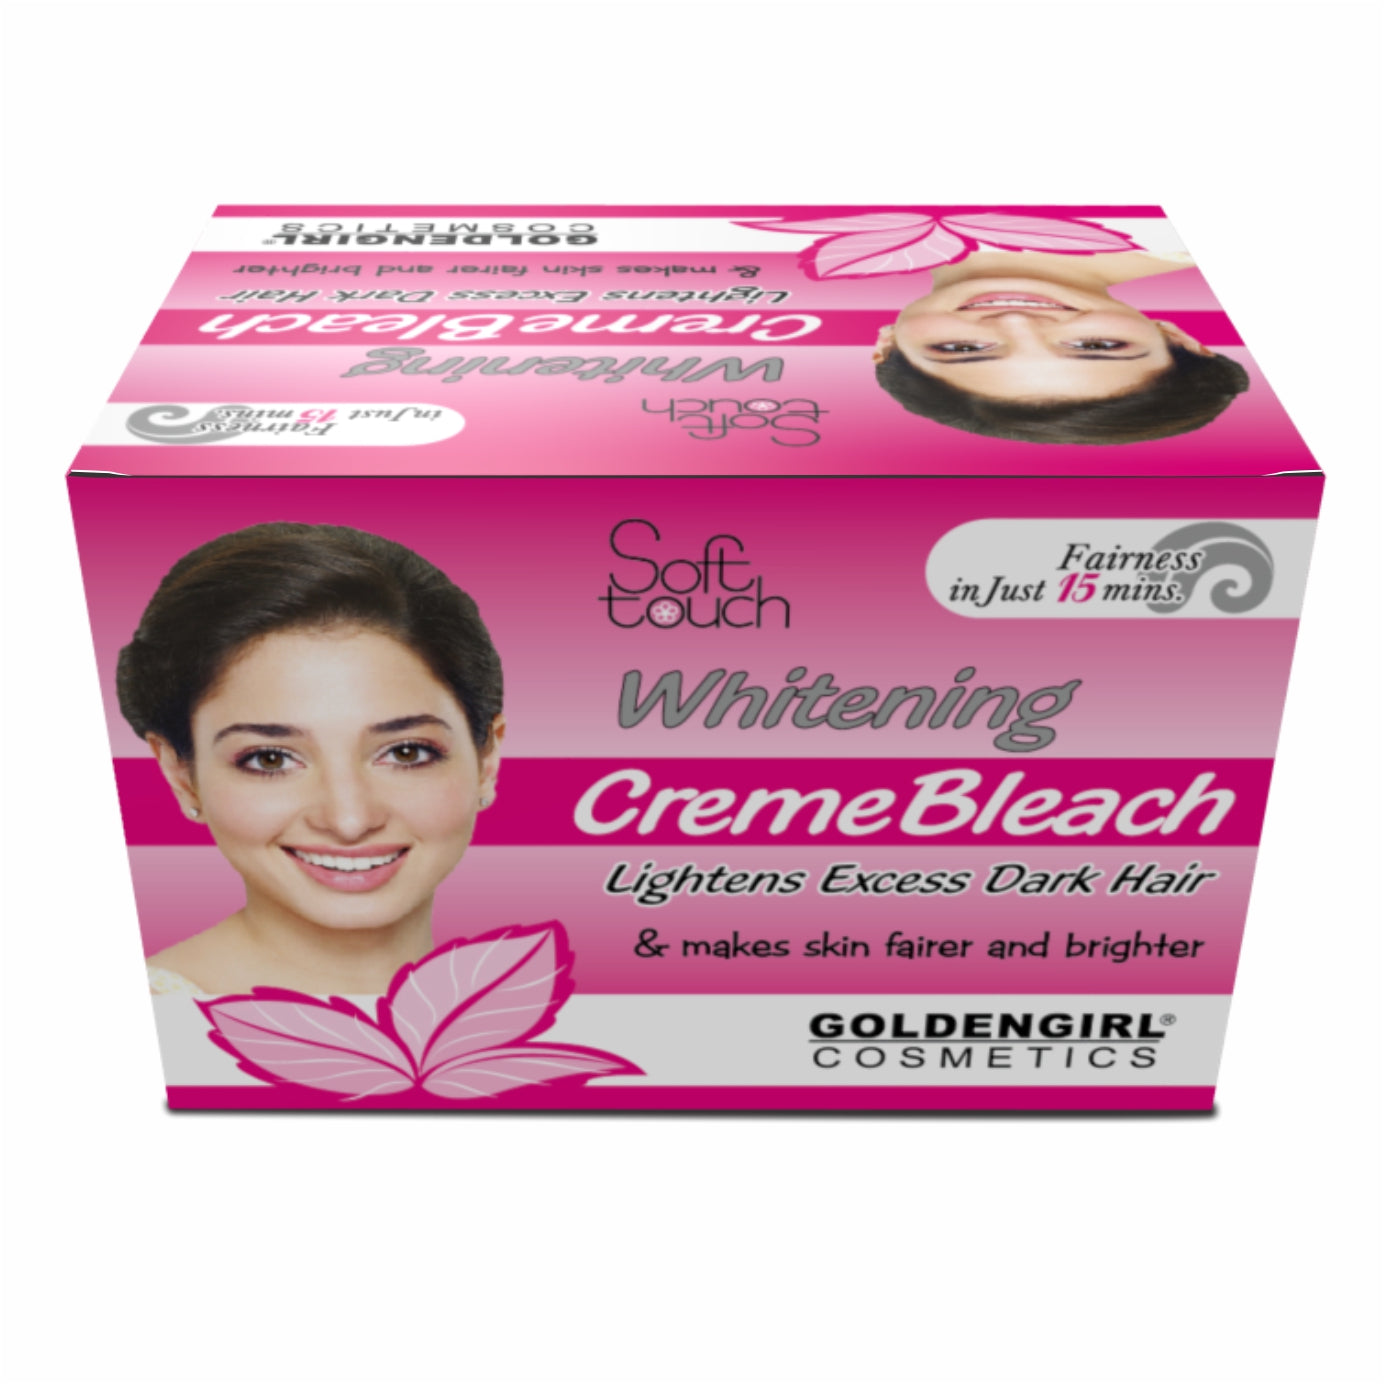 Whitening Bleach Creme Trial Pack 25gm - Golden Girl Cosmetics